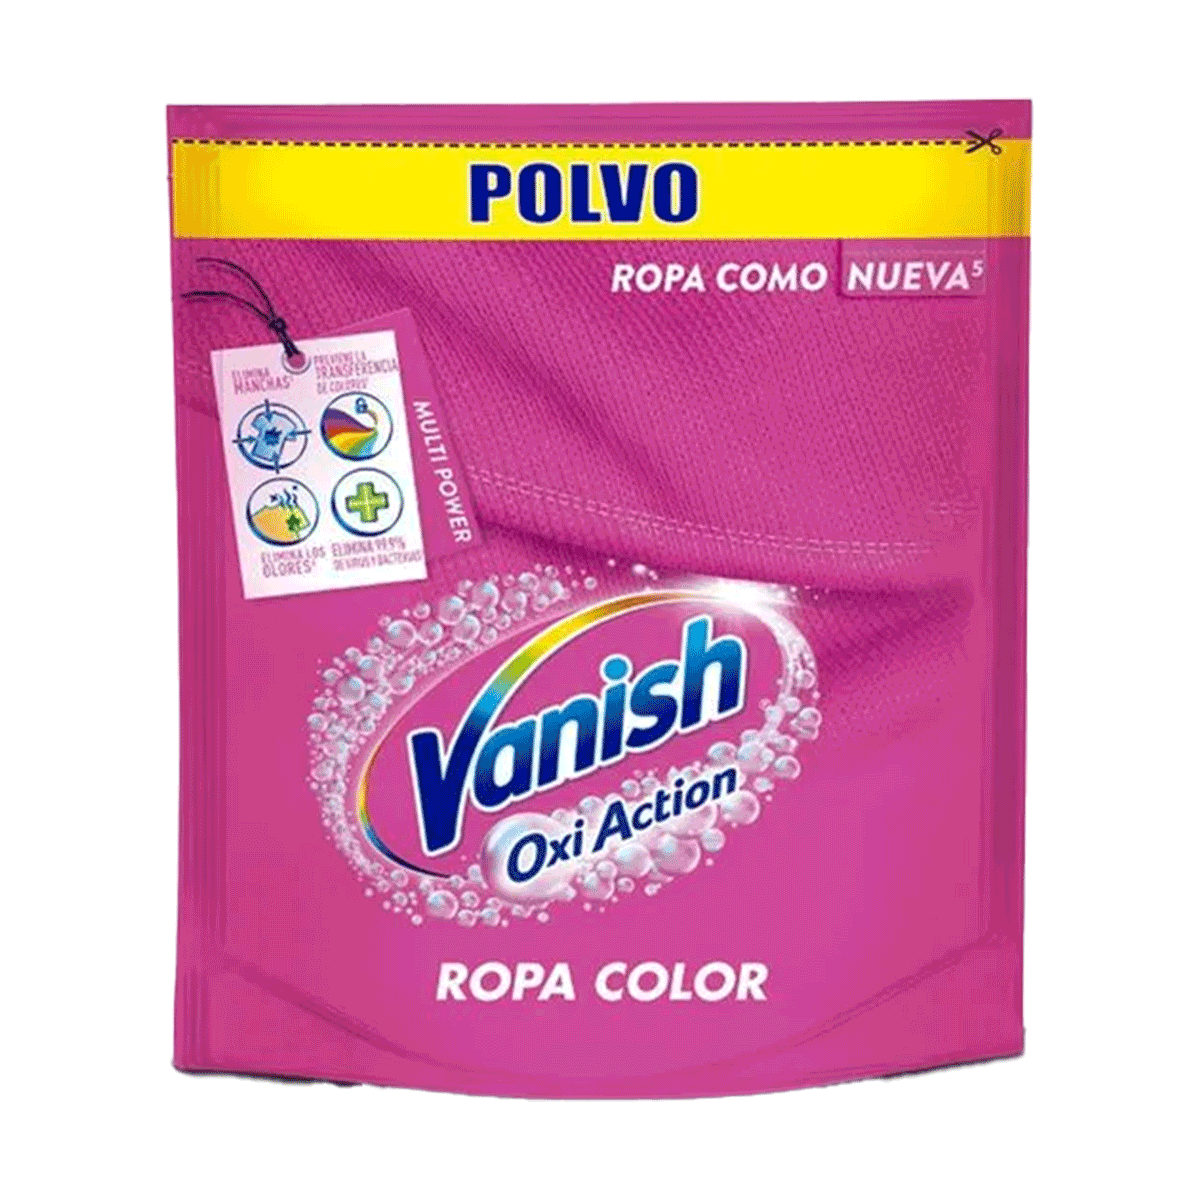  Vanish oxi Action - Polvo quitamanchas - 7.05 oz